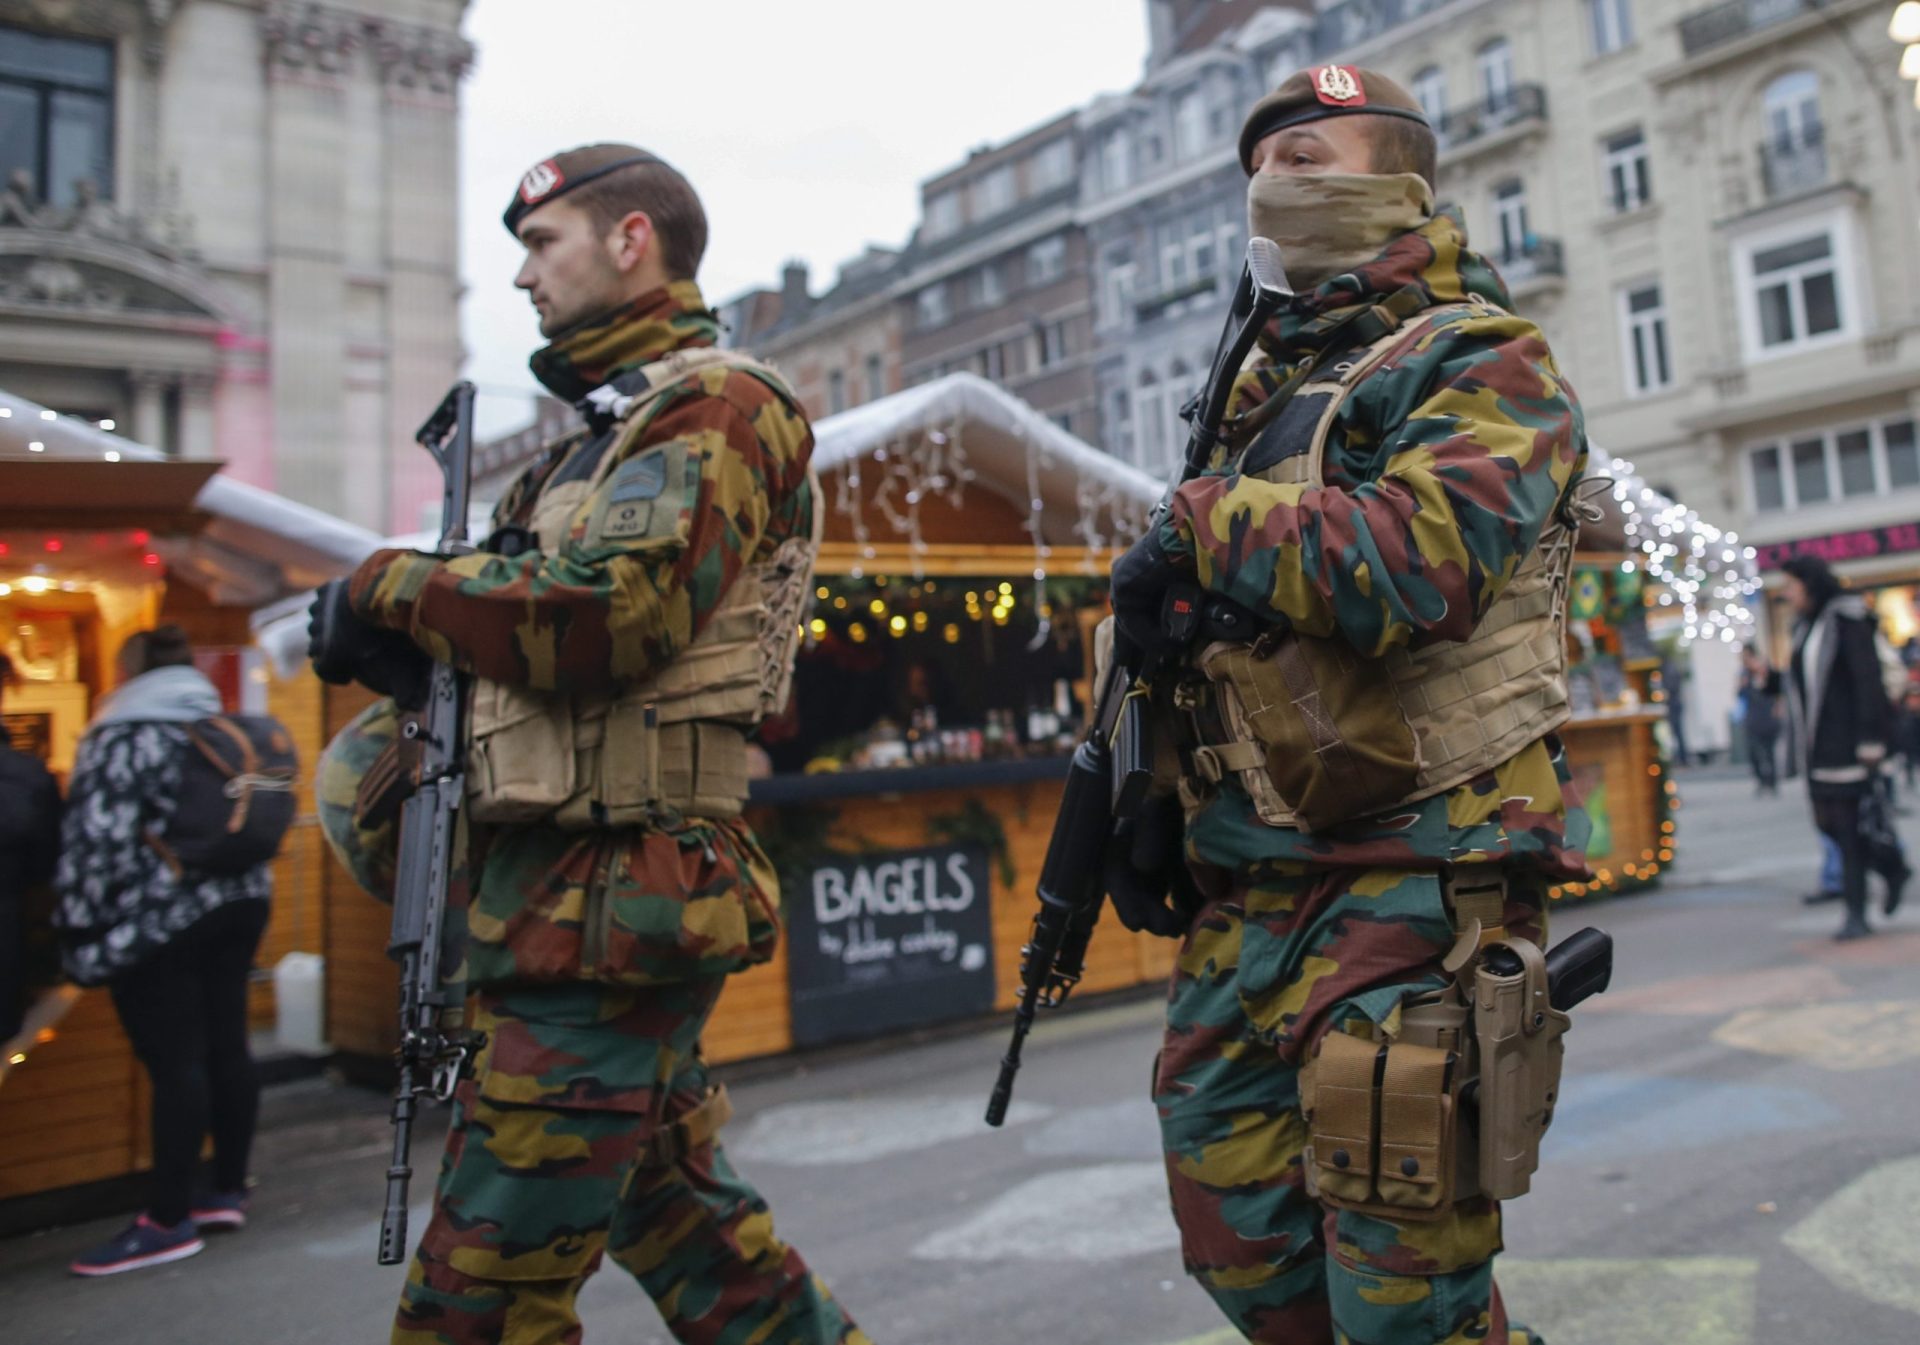 Atentados: Sexto suspeito acusado na Bélgica